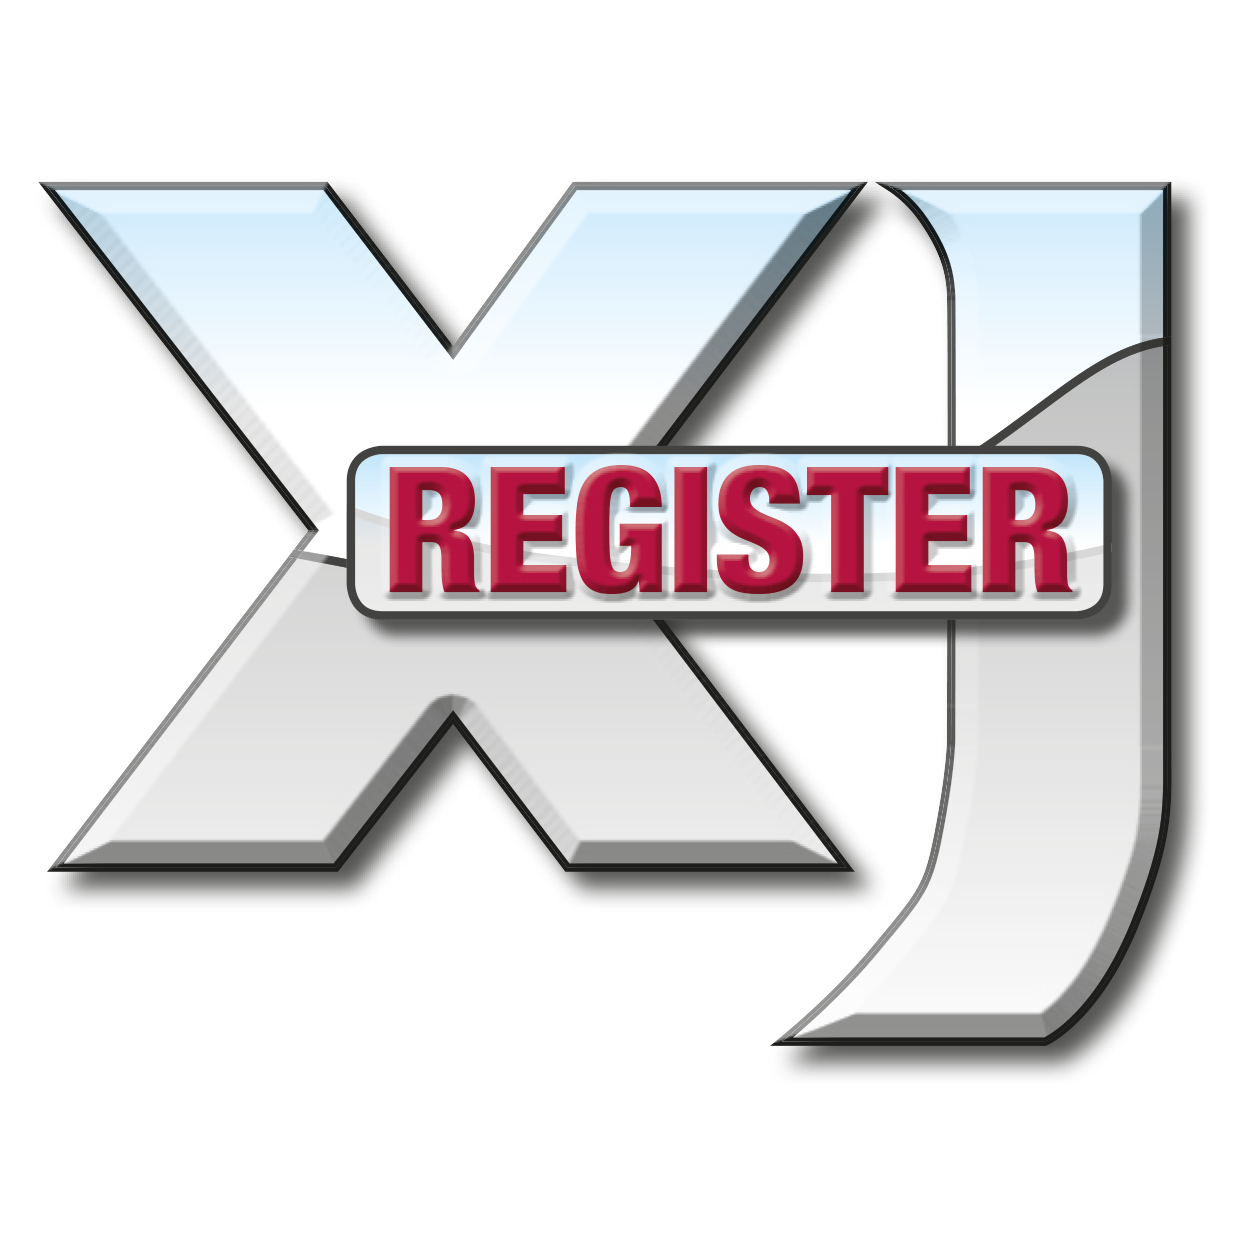 The XJ Register